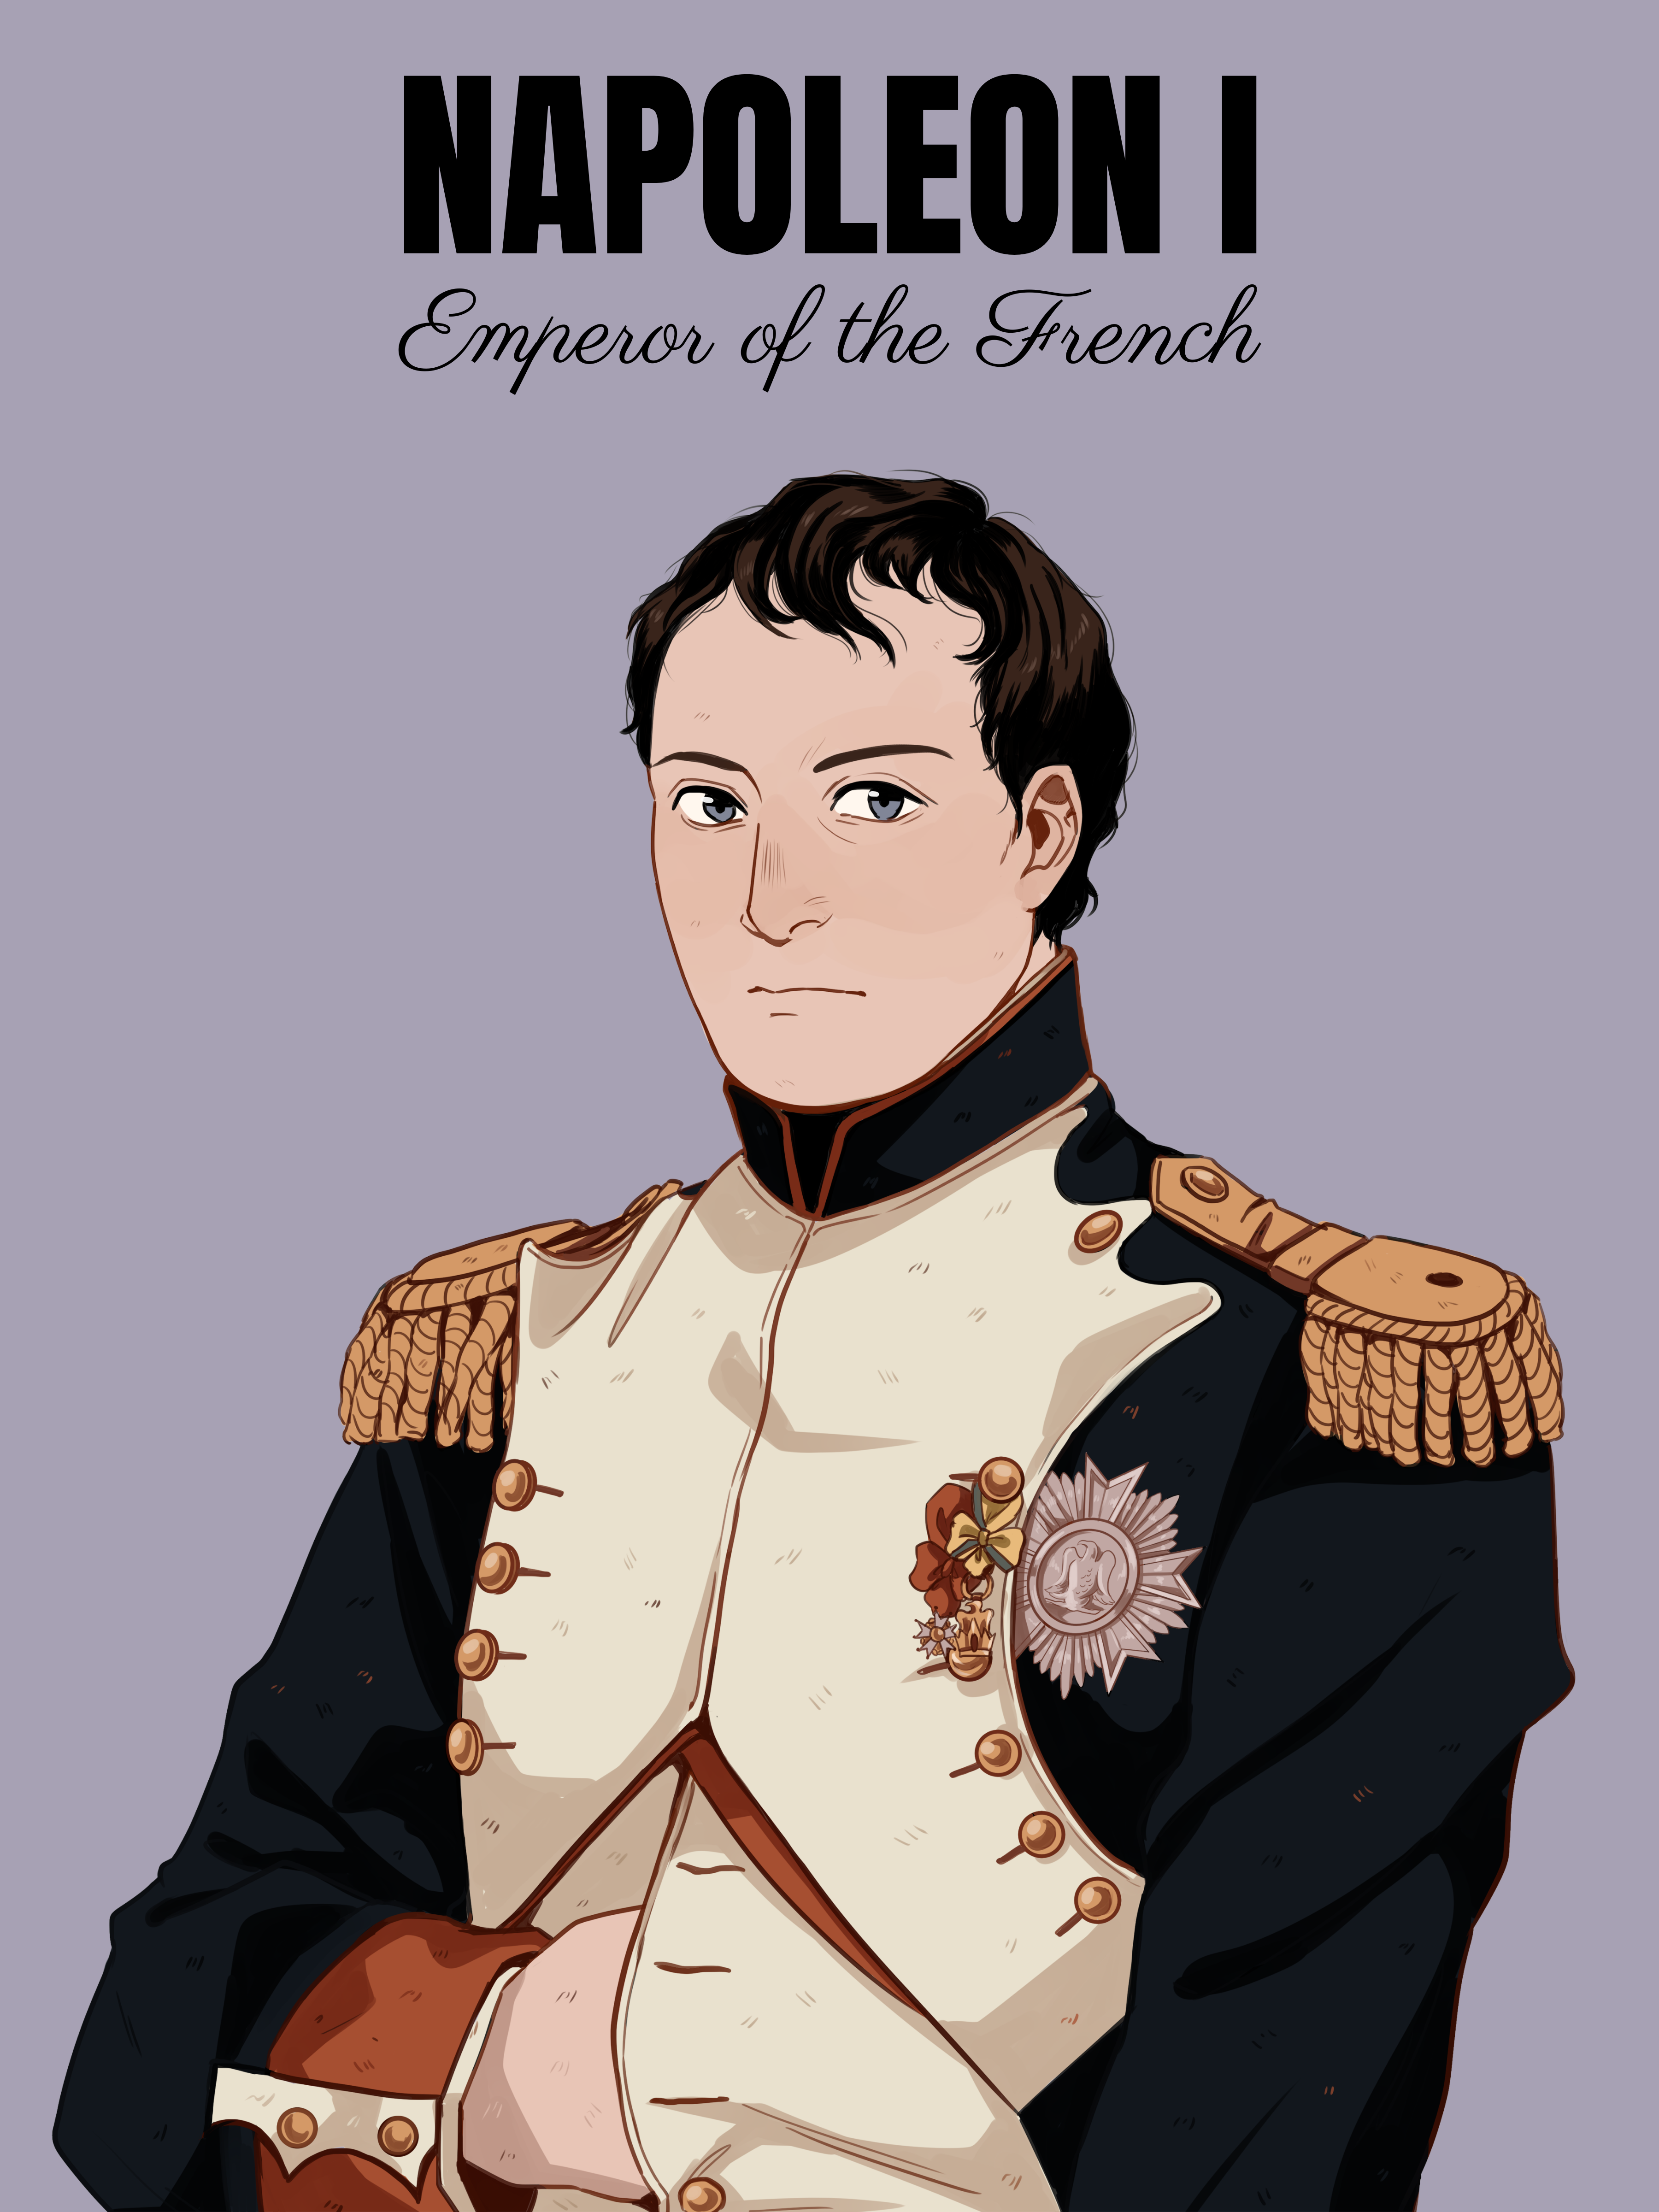 Emperor Napoleon Manga Style Art Print - Napoleonic Impressions